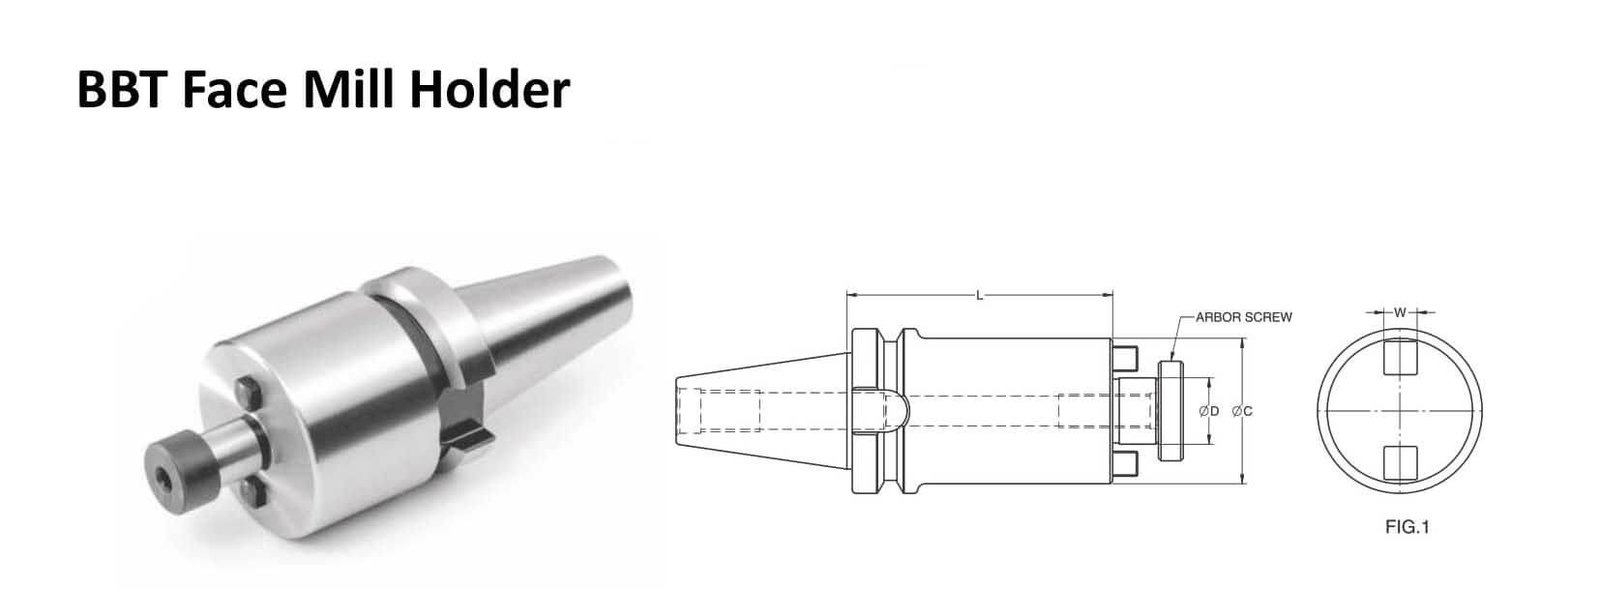 BBT30 FMH 0.500 - 2.00 Face Mill Holder (Balanced to 2.5G 25000 RPM)